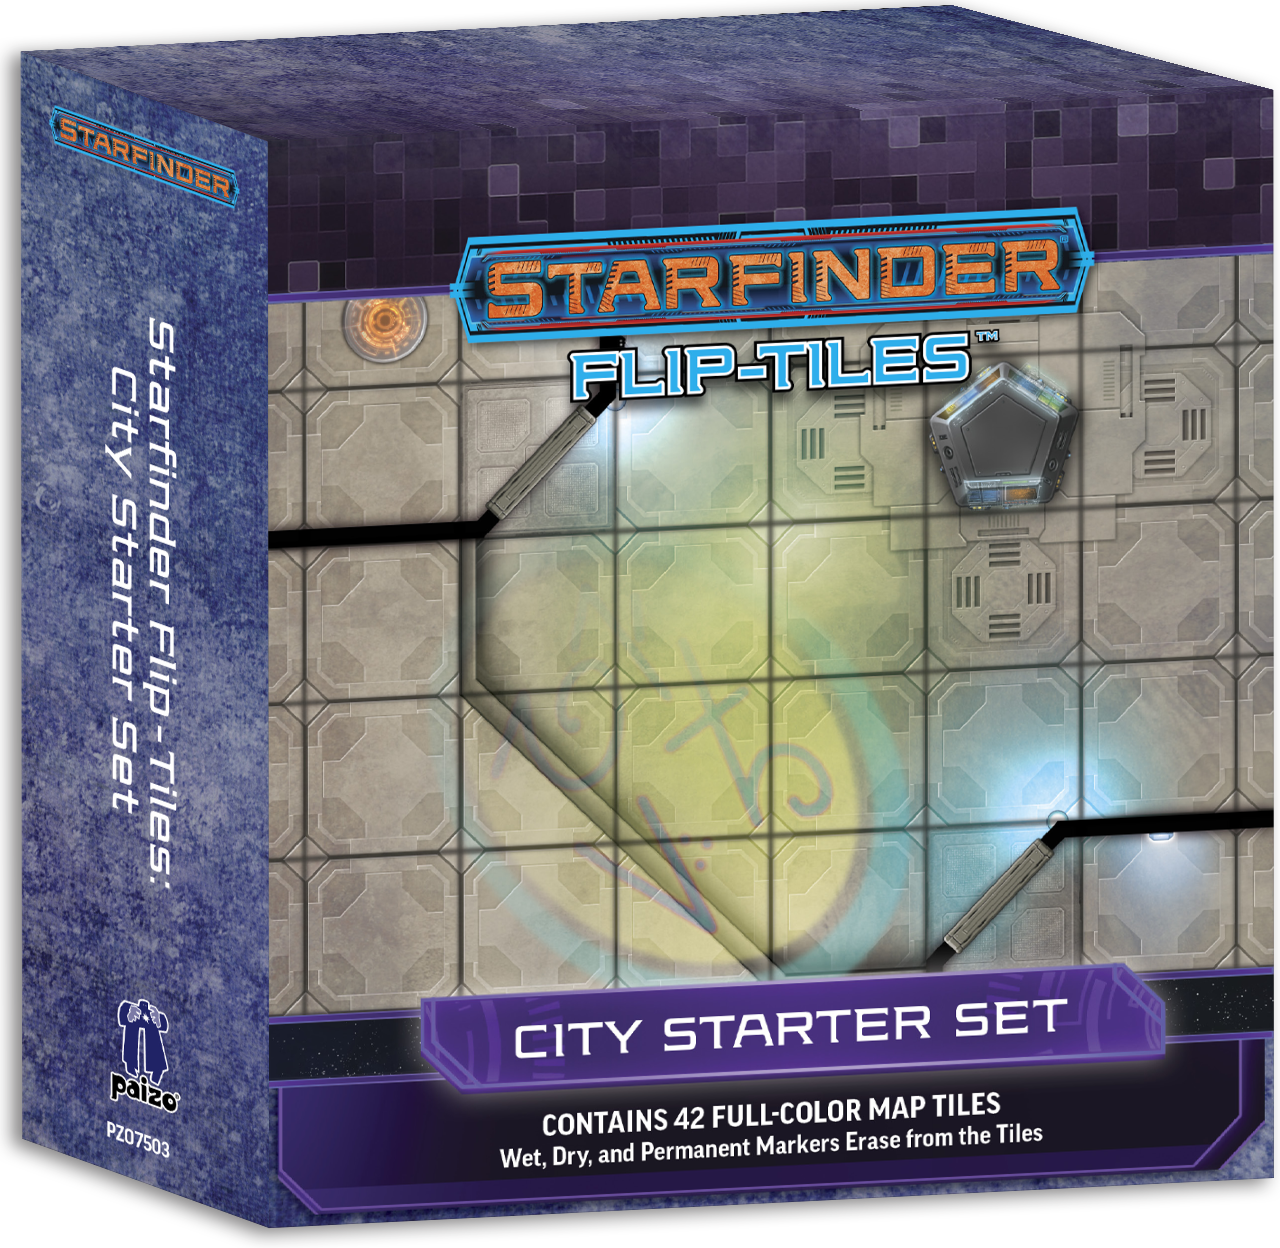 Starfinder Flip-Tiles: City Starter Set box